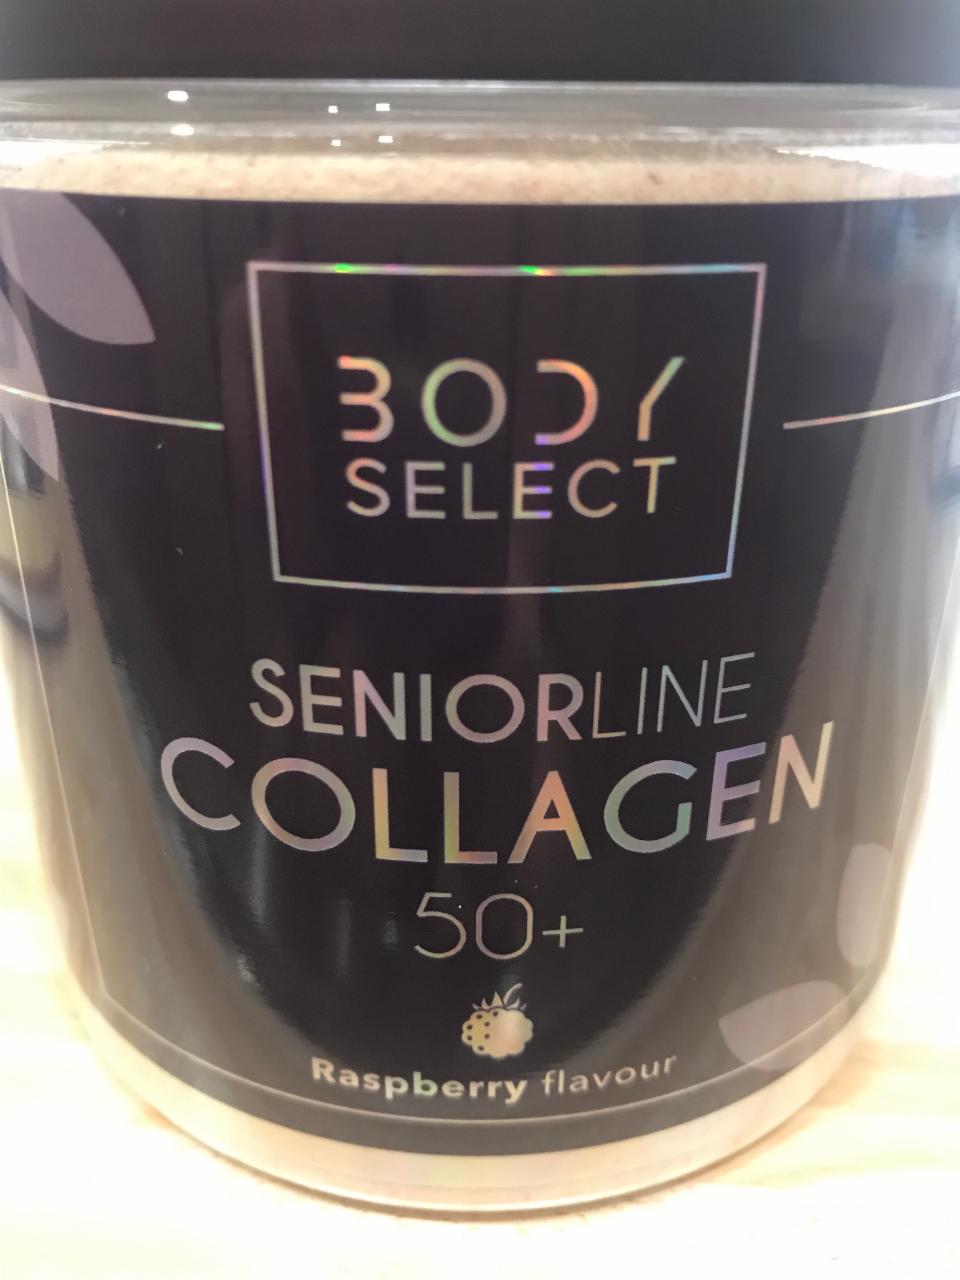 Képek - Seniorline collagen málna ízű Body Select